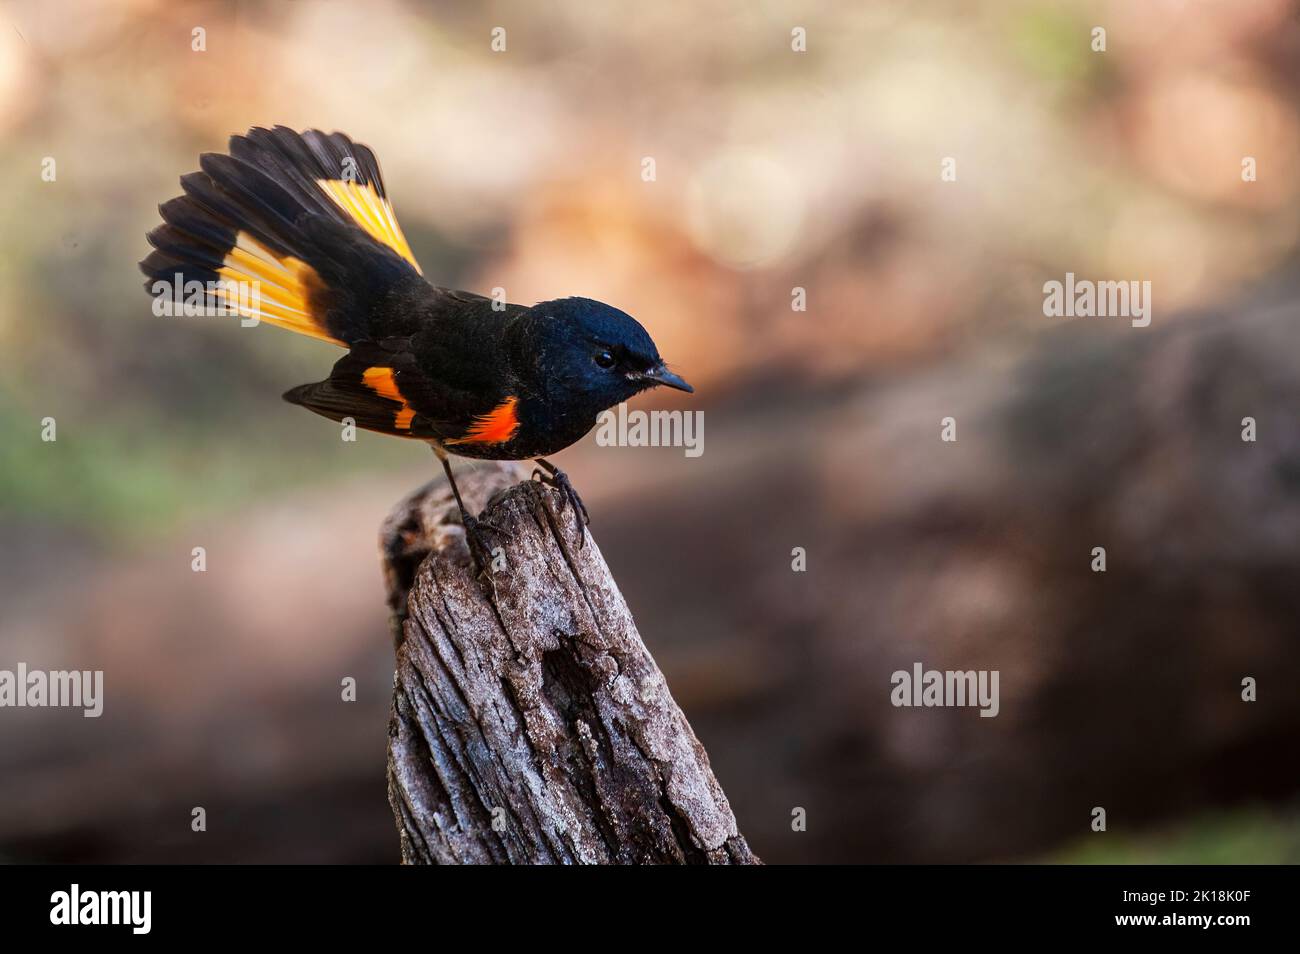 Male American redstart warbler flashing tail during autumn migration Stock Photo